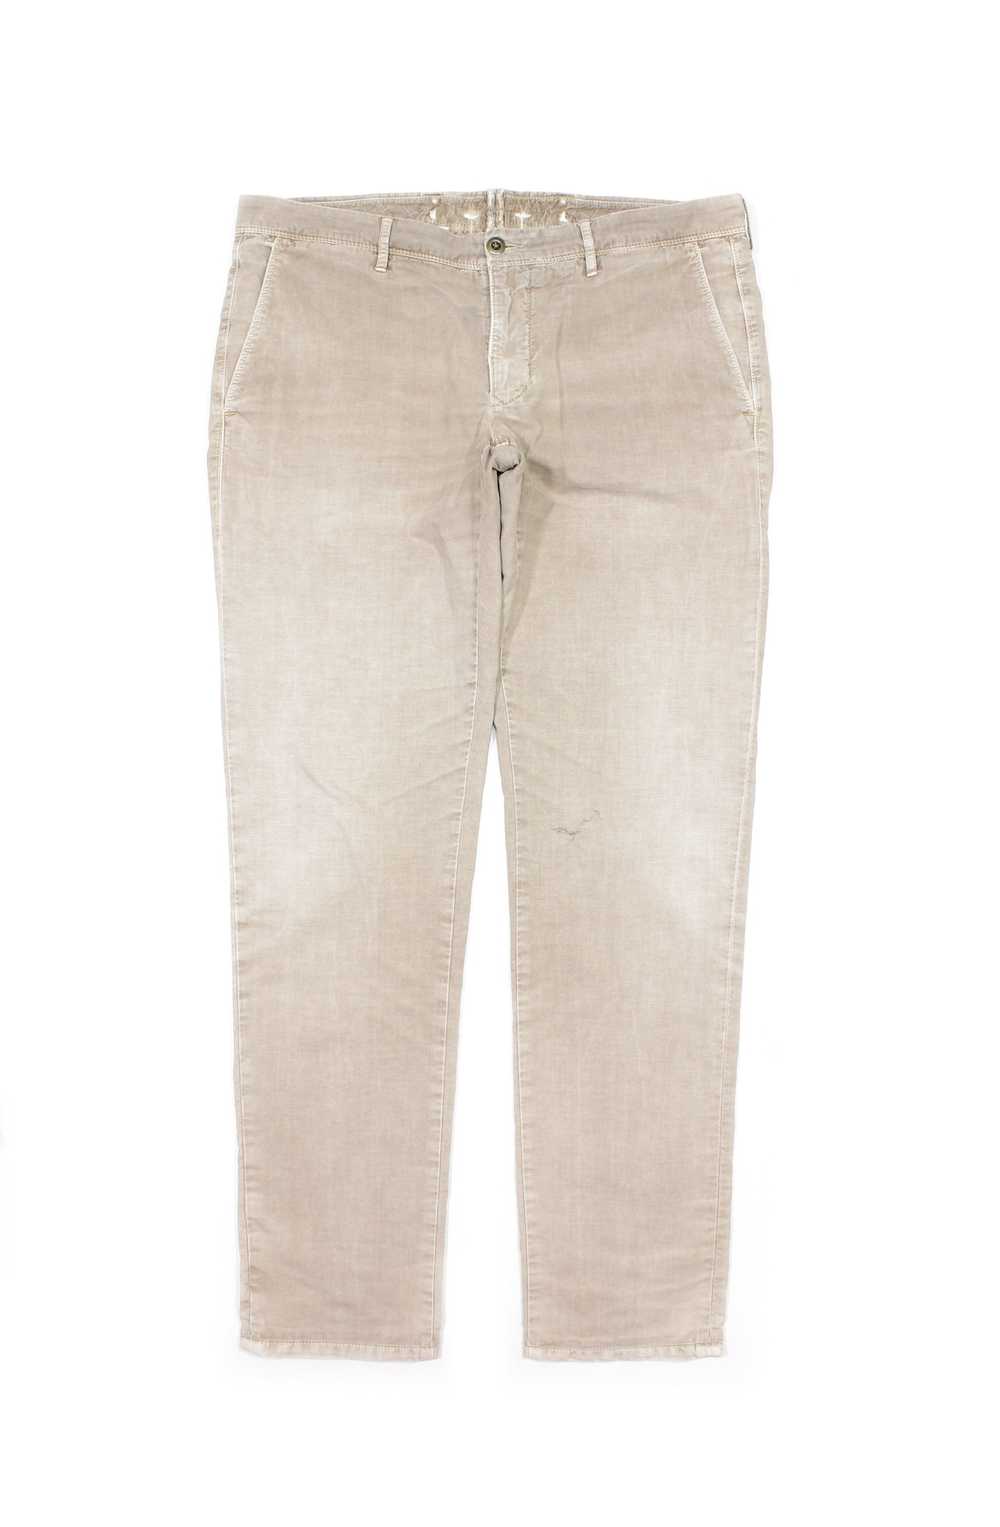 Incotex Slacks Faded Slim Fit Pants - image 1